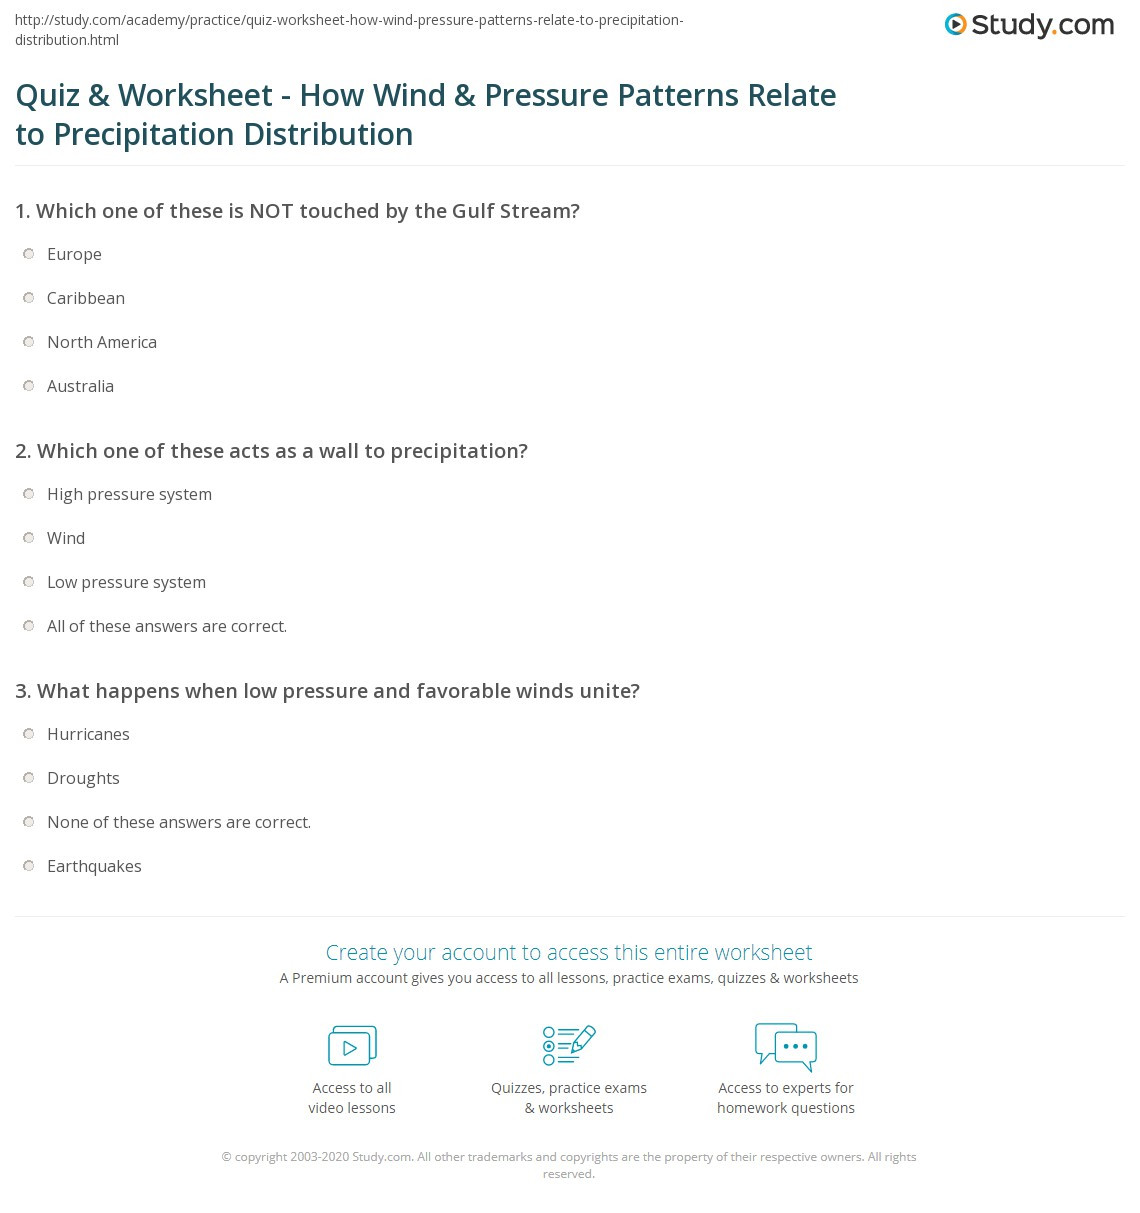 Global Wind Patterns Worksheet Quiz &amp; Worksheet How Wind &amp; Pressure Patterns Relate to